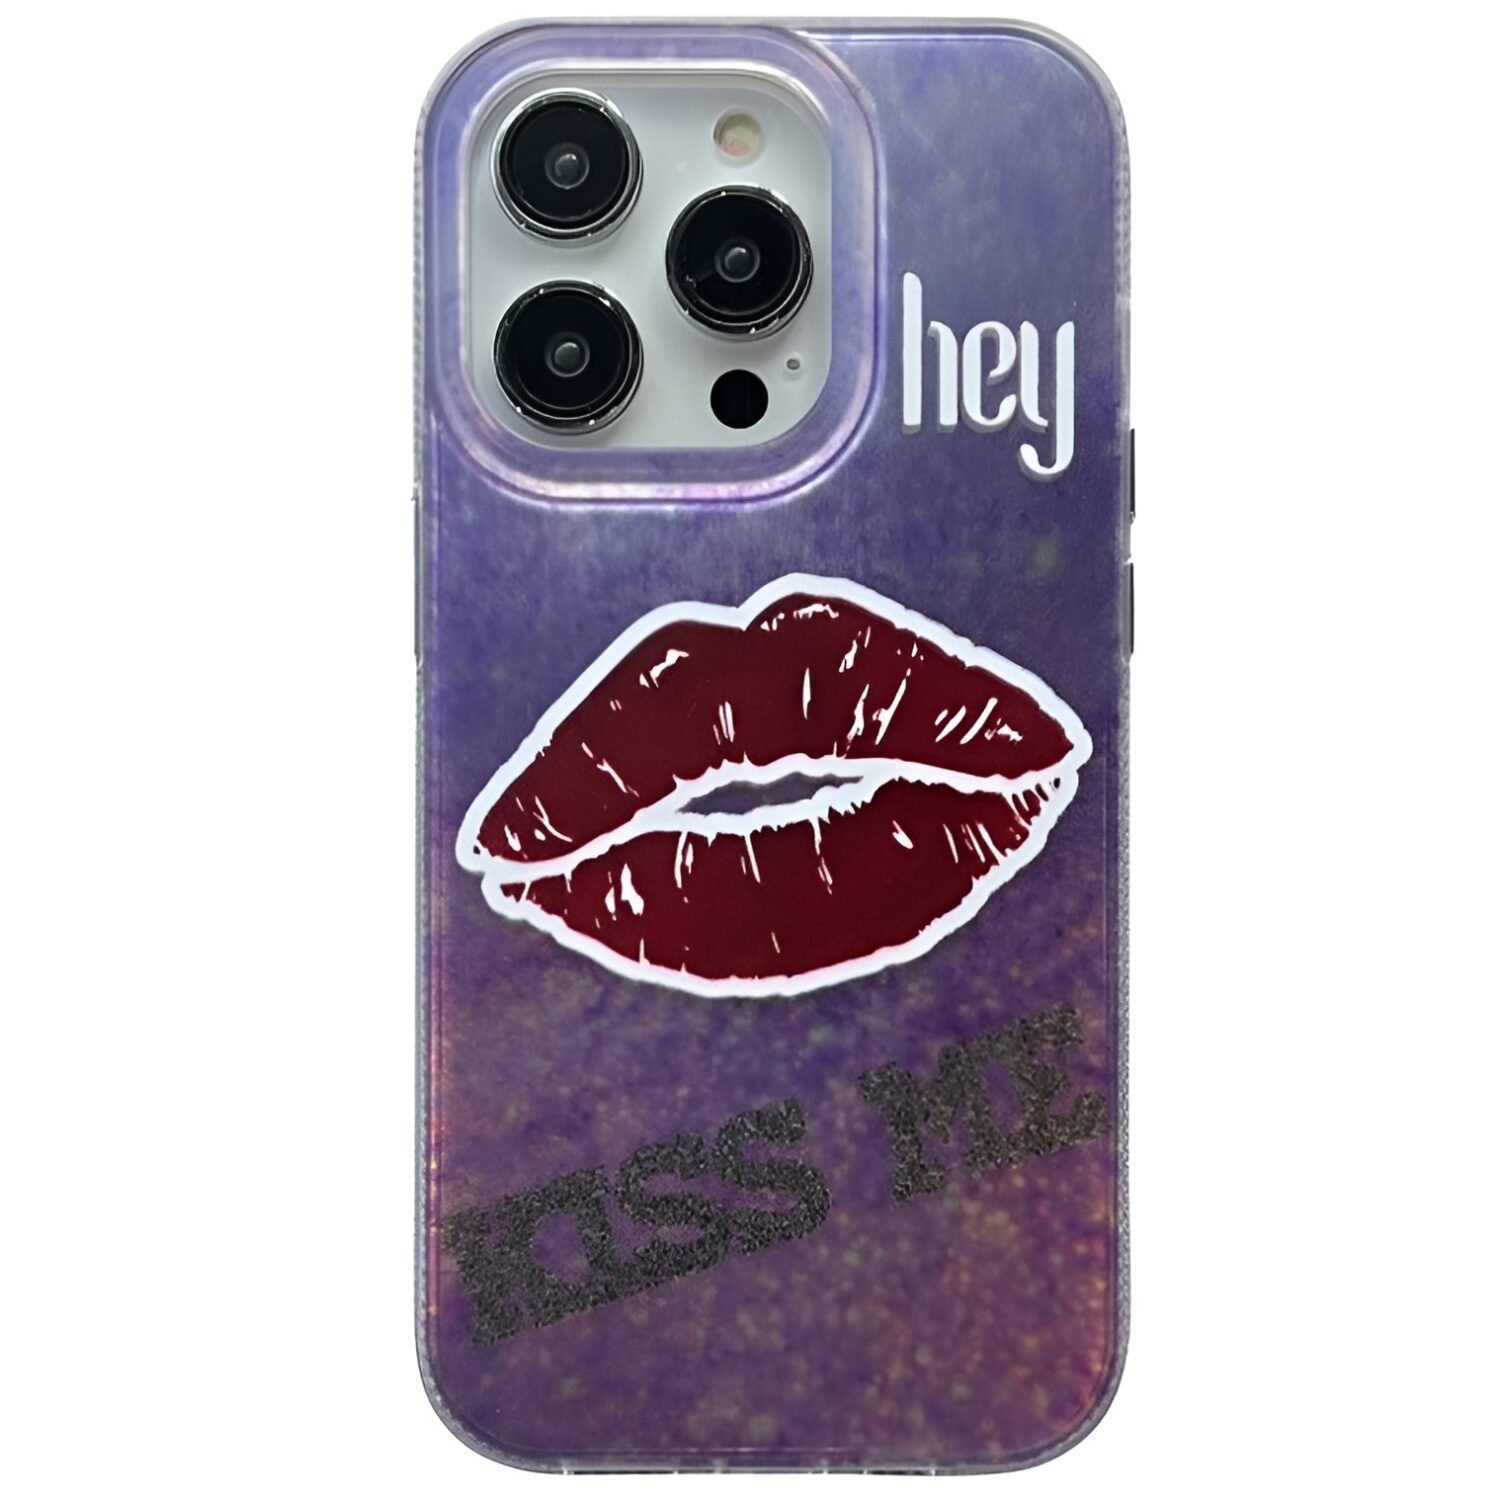 hey kiss phone case